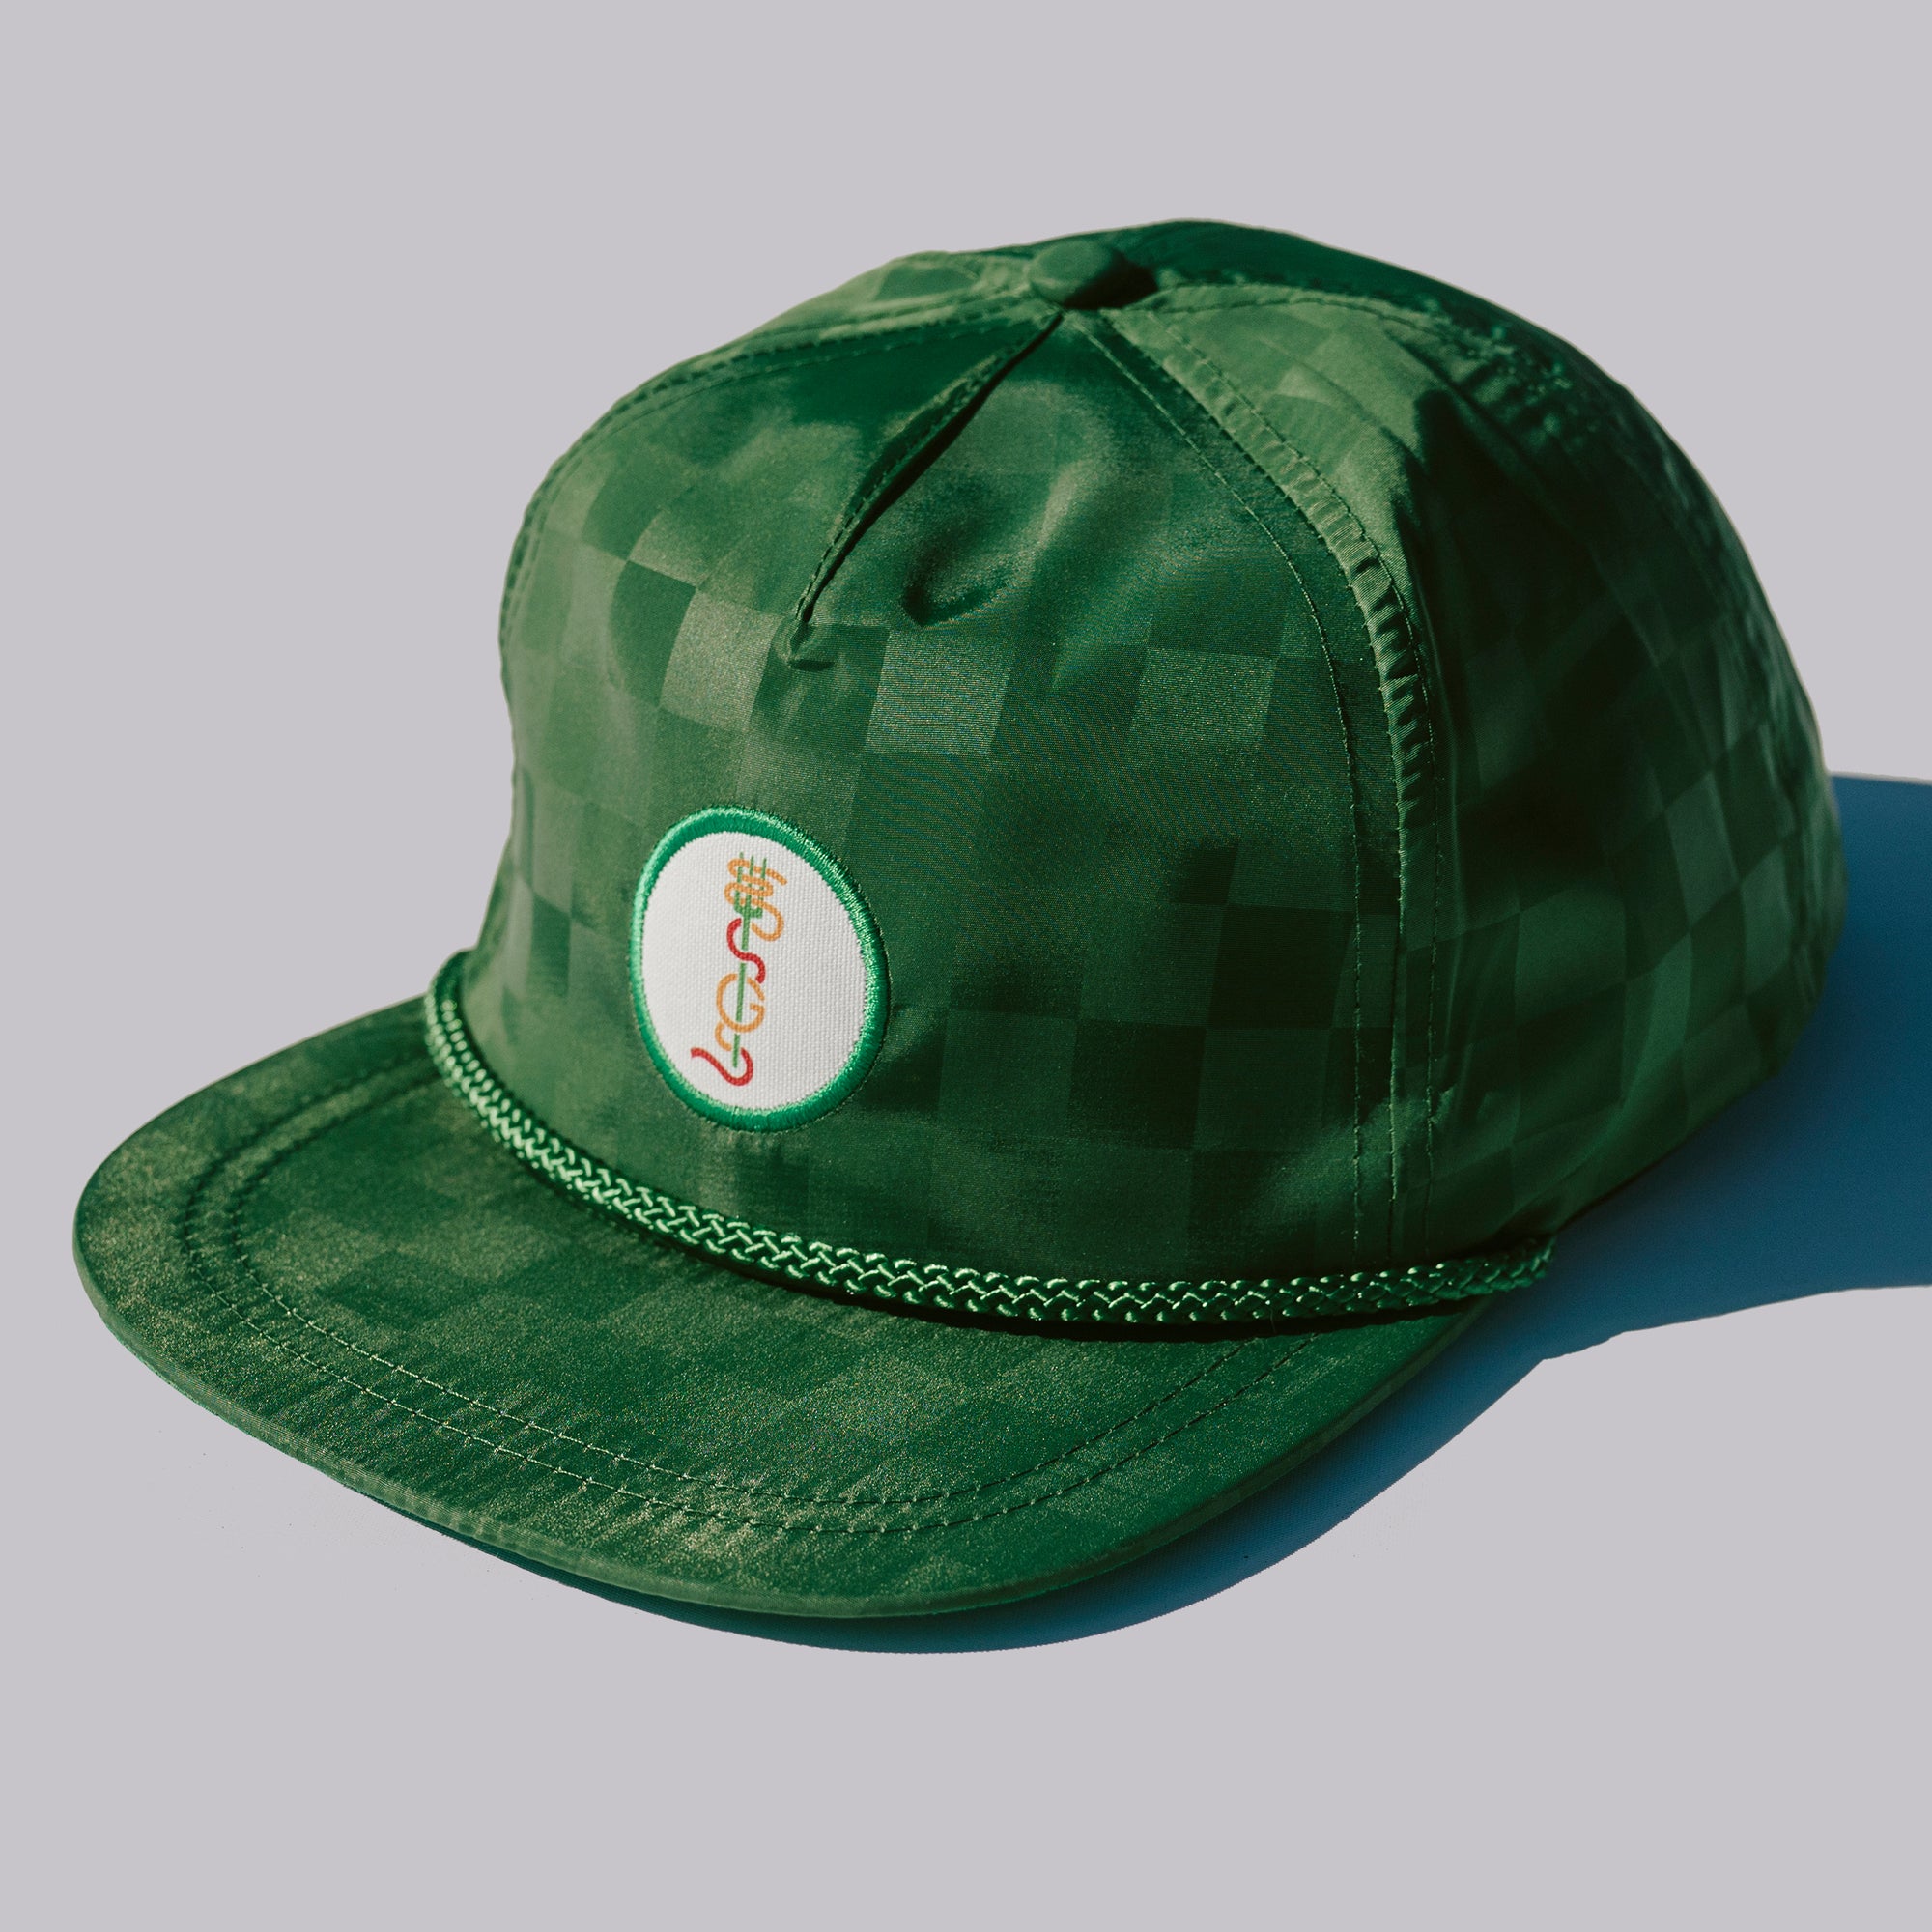 Louis Vuitton Monogram Mesh Cap - Green Hats, Accessories